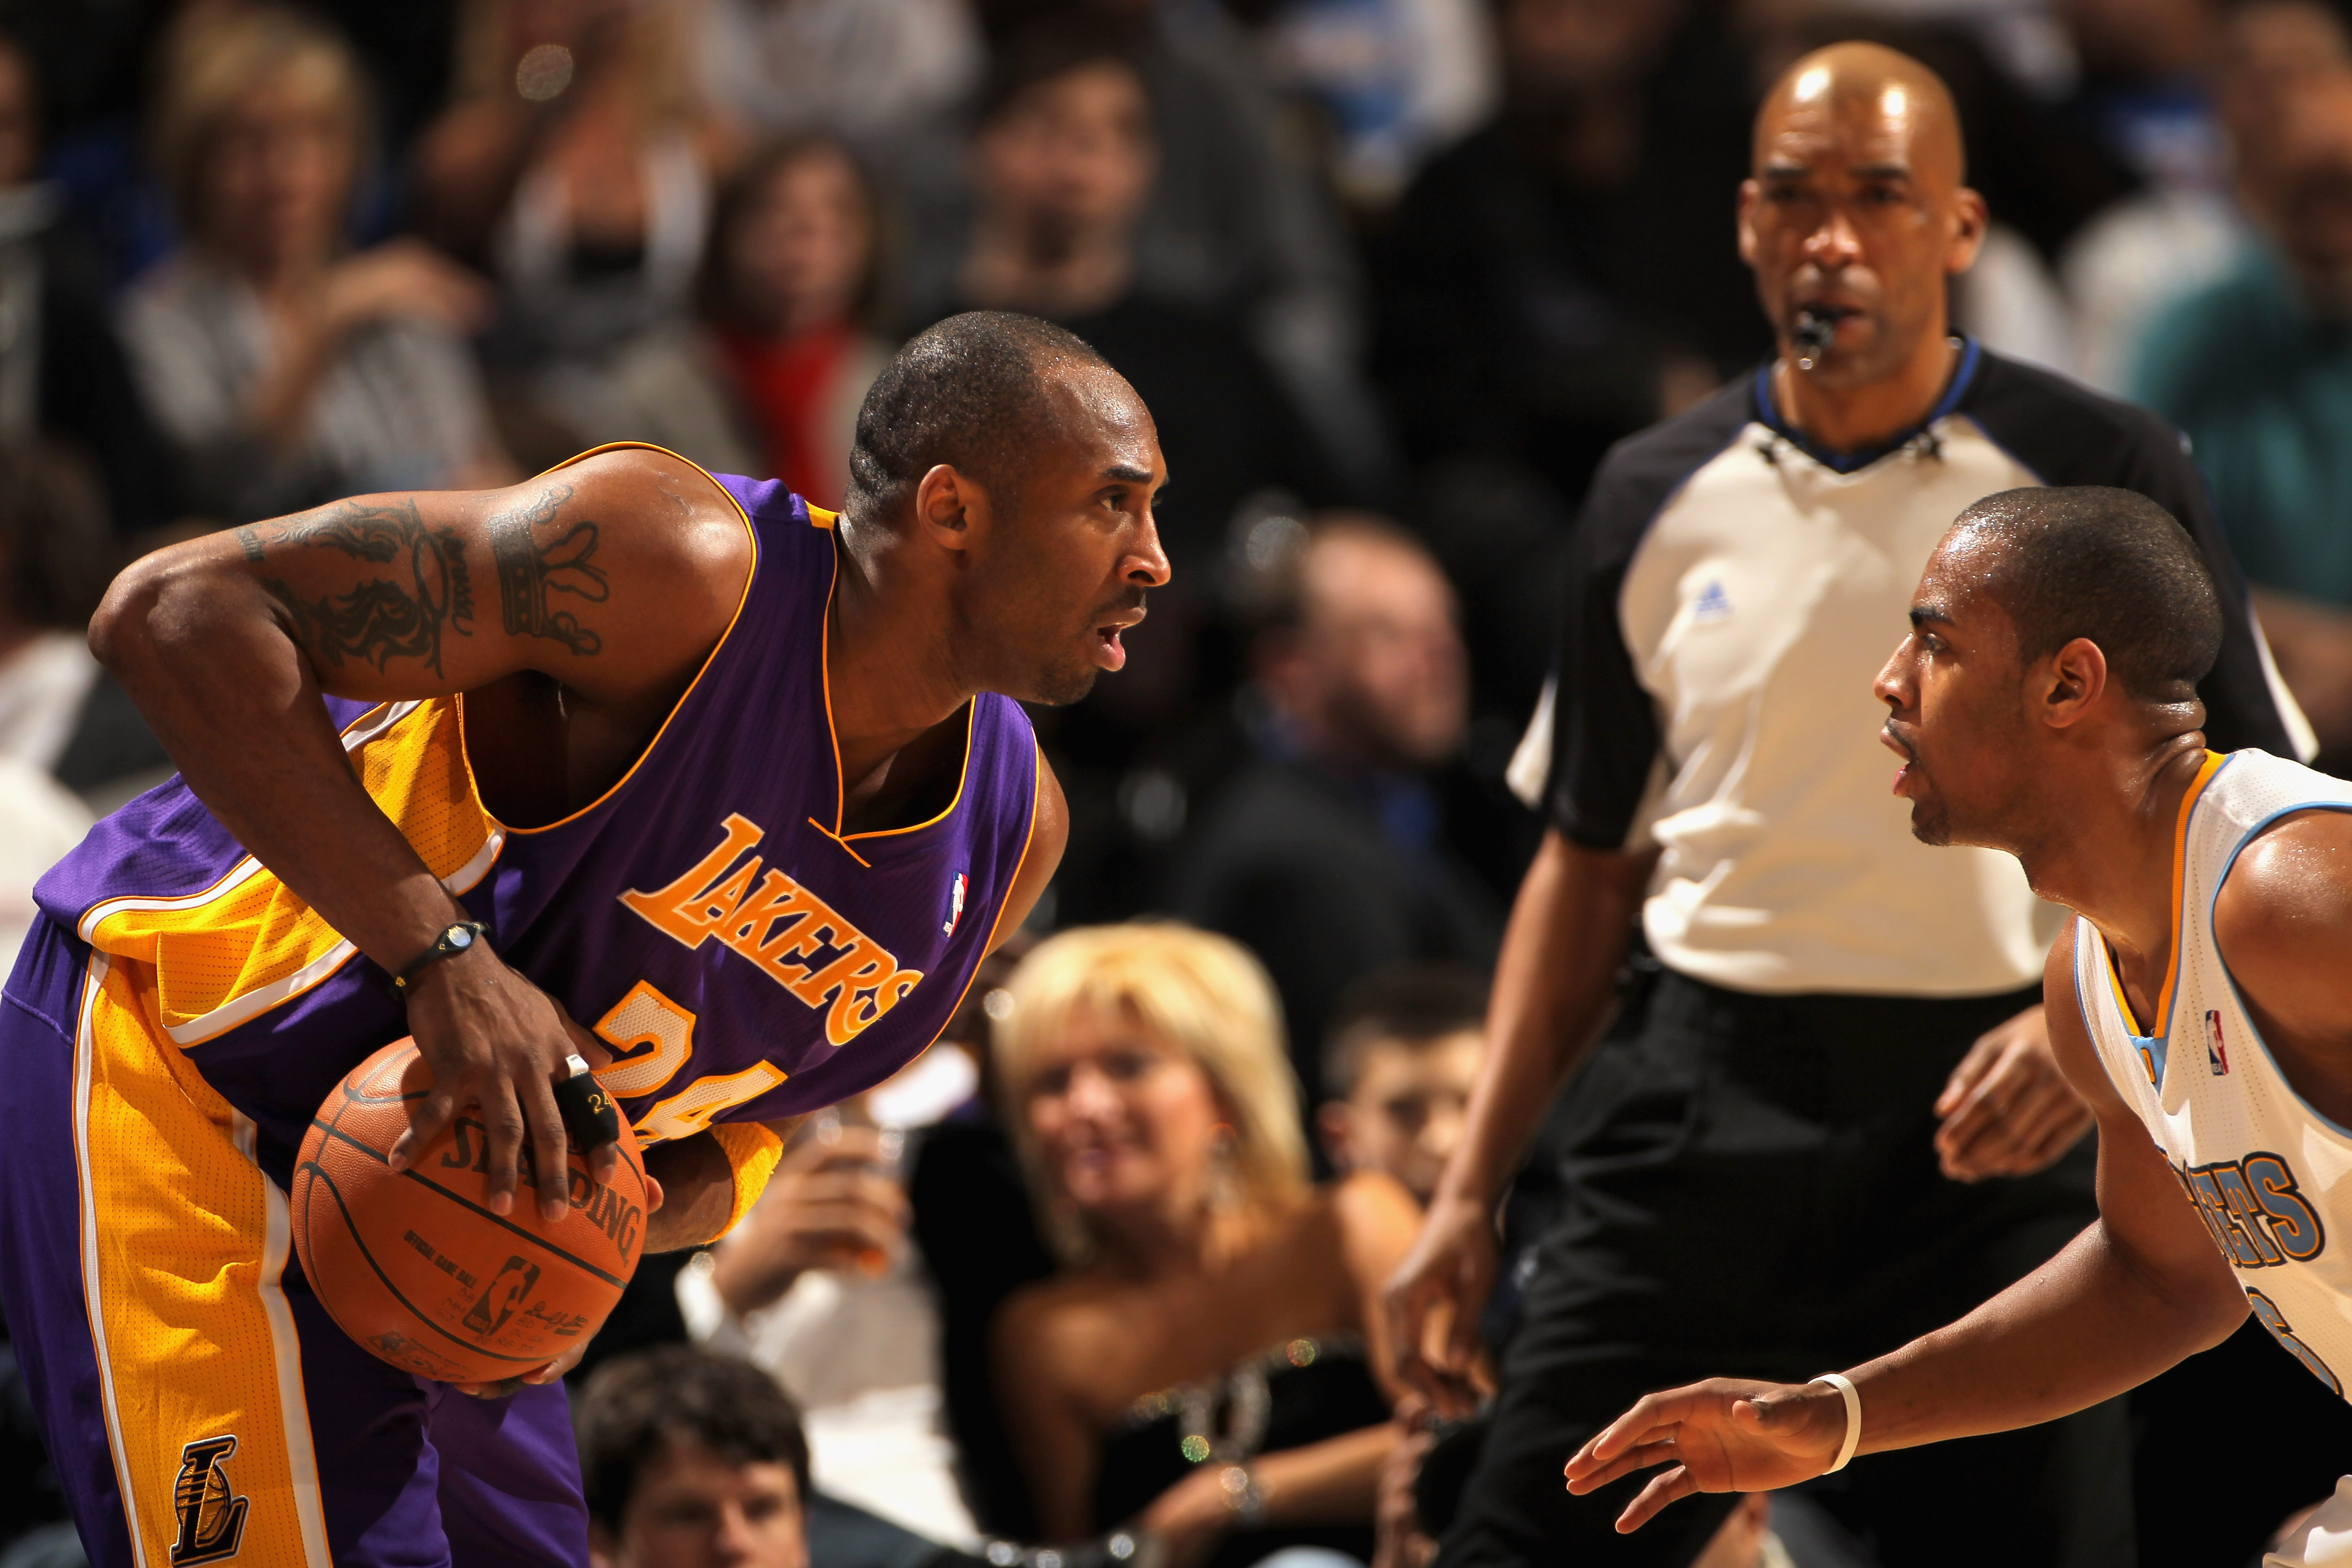 Kobe Bryant vs. LeBron James: Could Kobe Lead Cavaliers To ... - 4896 x 3264 jpeg 1791kB